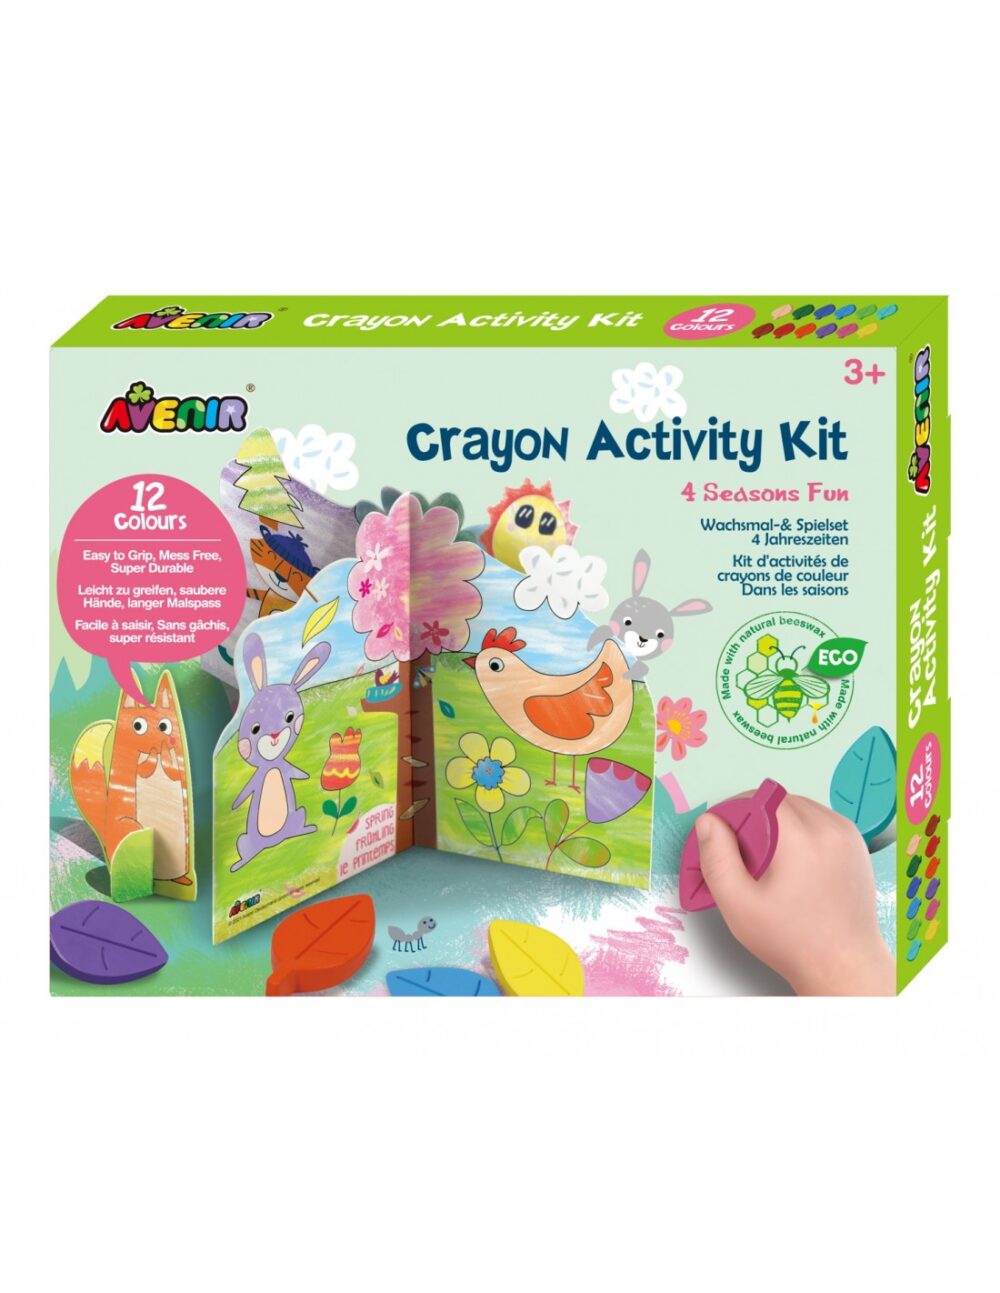 crayon activity kit 4 seasons fun 6